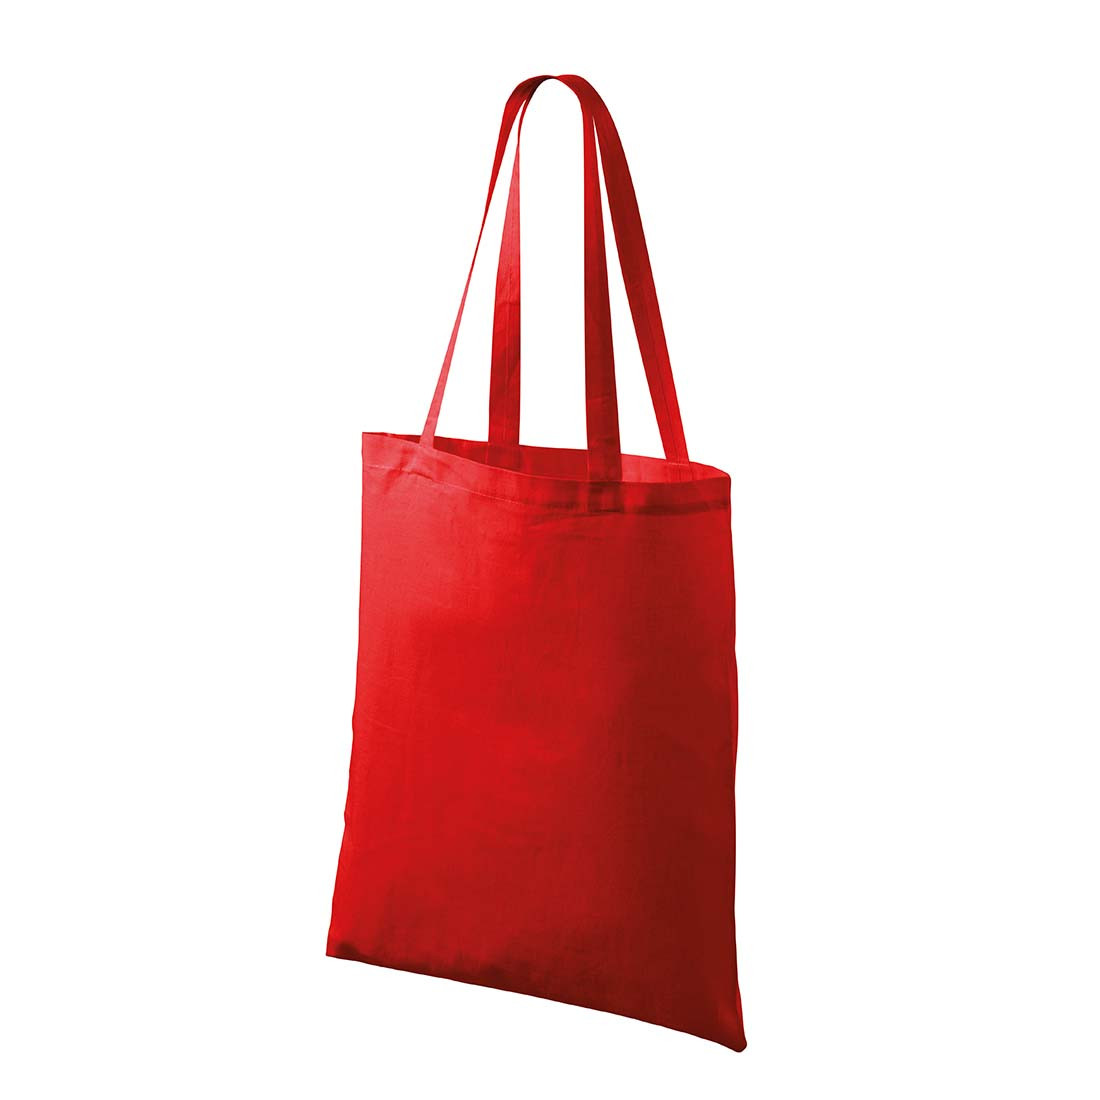 HANDY Shopping Bag - Technical